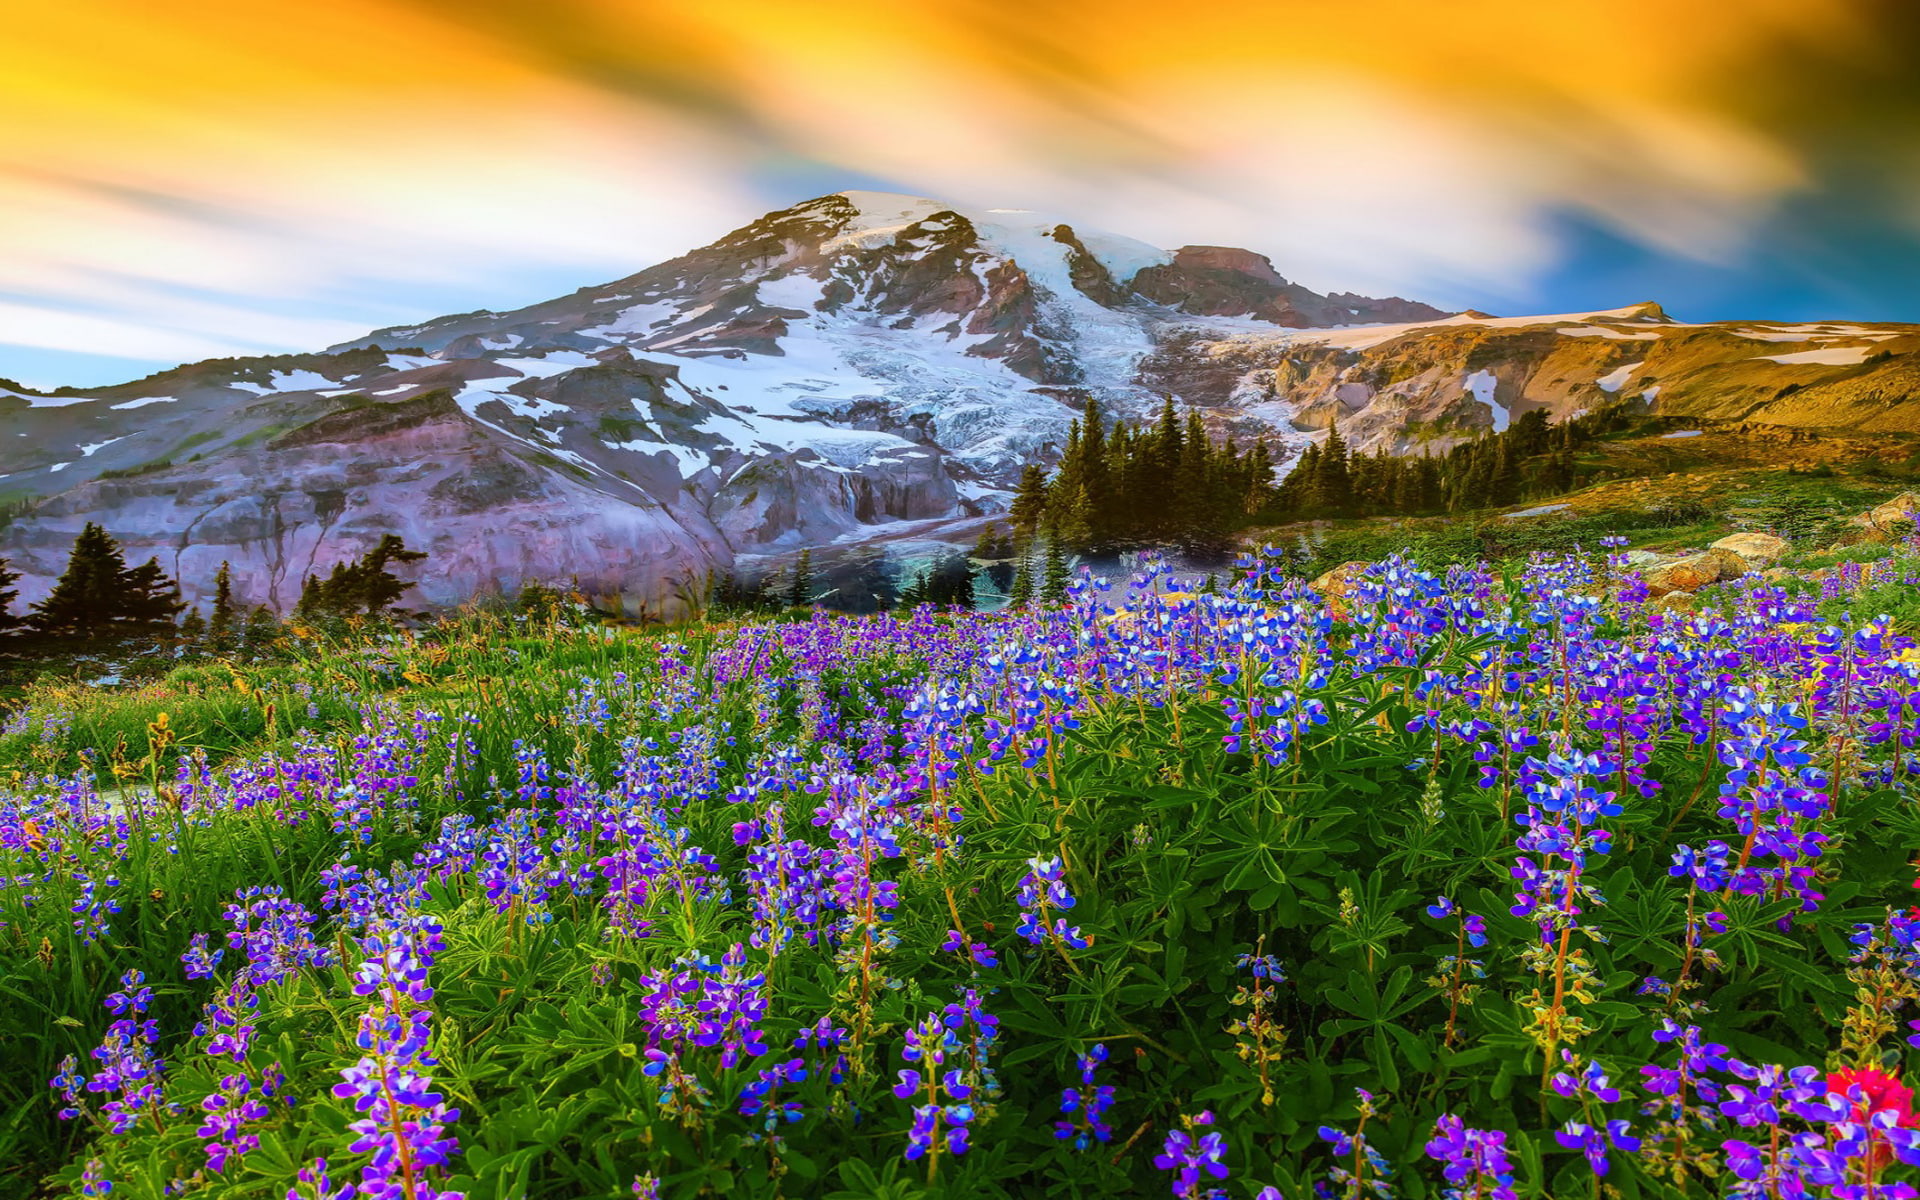 Beautiful Spring Landscape Nature Flowers Mountain Snow Mountain Paradise On Earth Mount Rainier National Park United States Desktop Wallpaper Hd 1920×1200